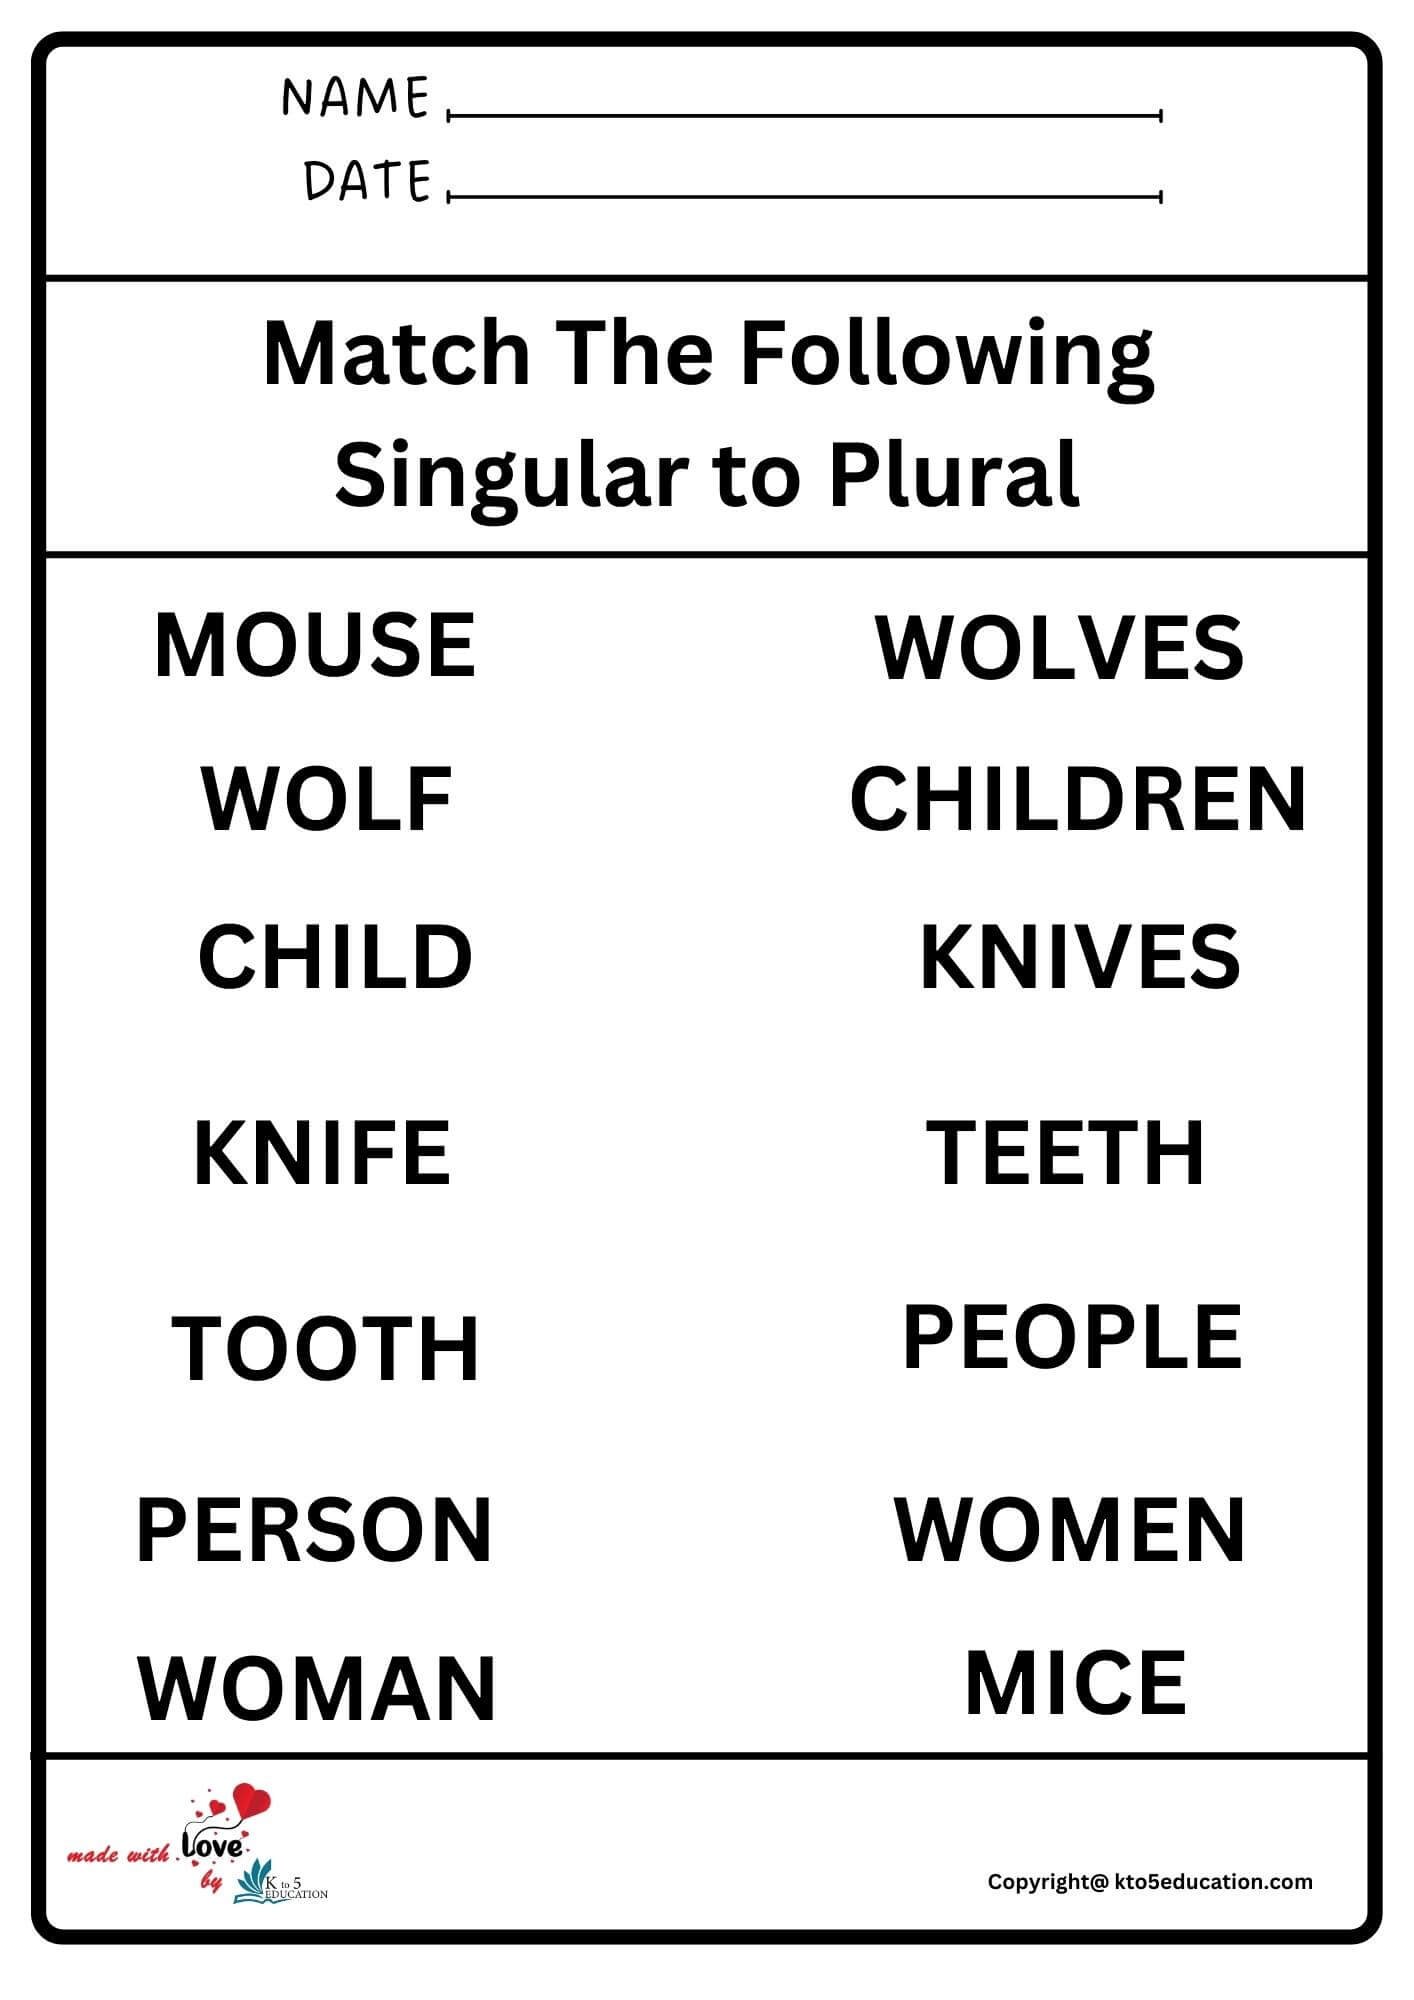 Match The Following Singular To Plural Worksheet 2